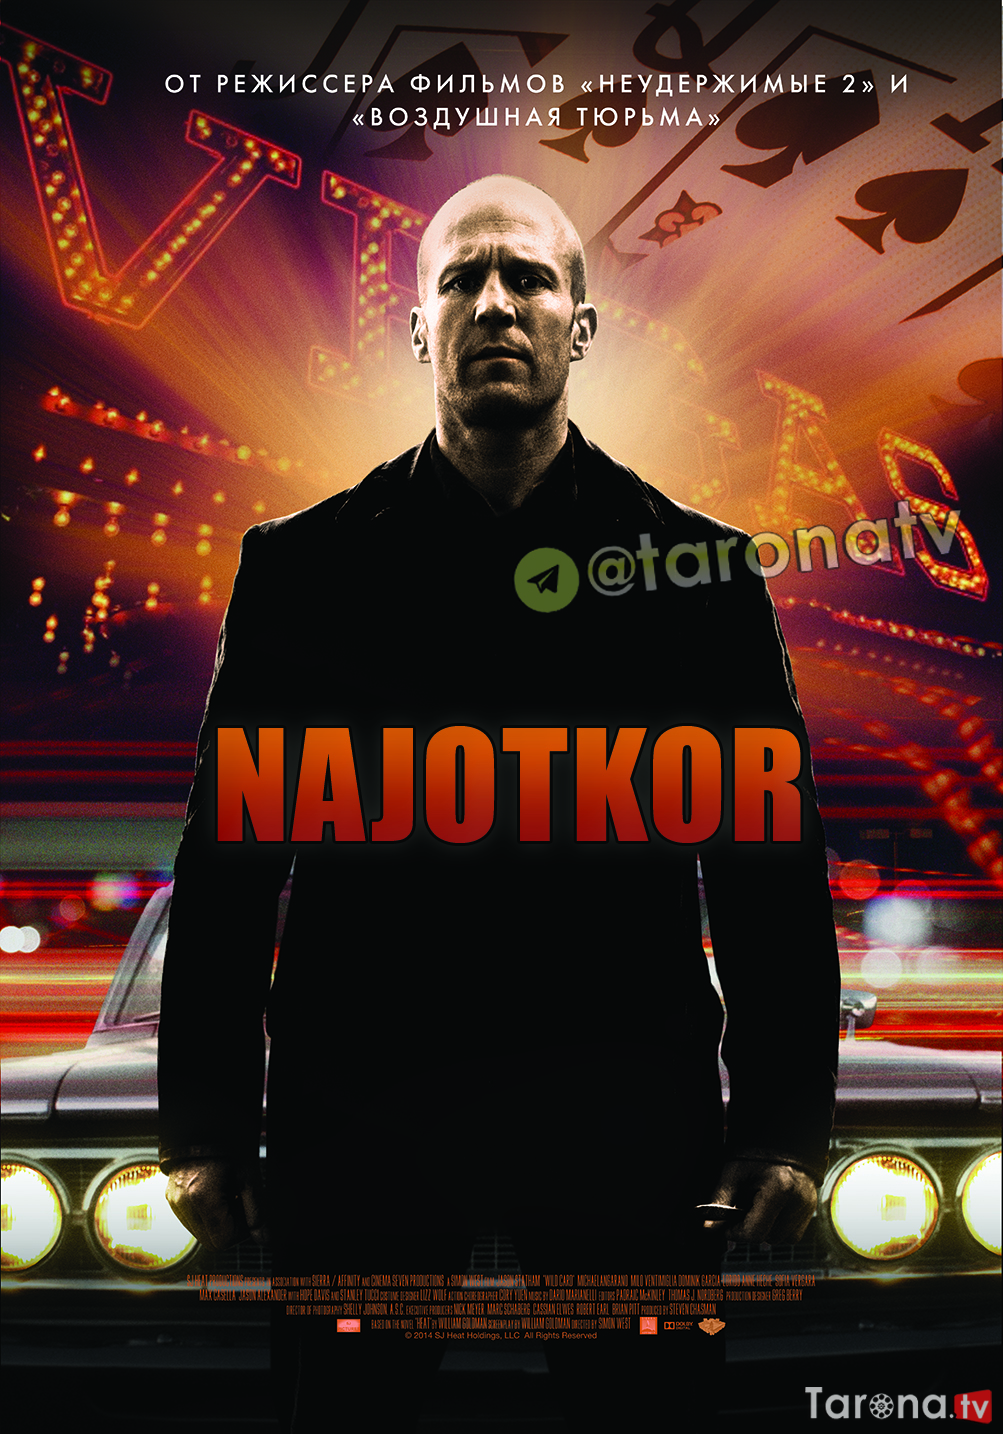 Najotkor (Uzbek tilida O'zbekcha tarjima, HD Kino, jangari, Kriminal, Drama) 2014